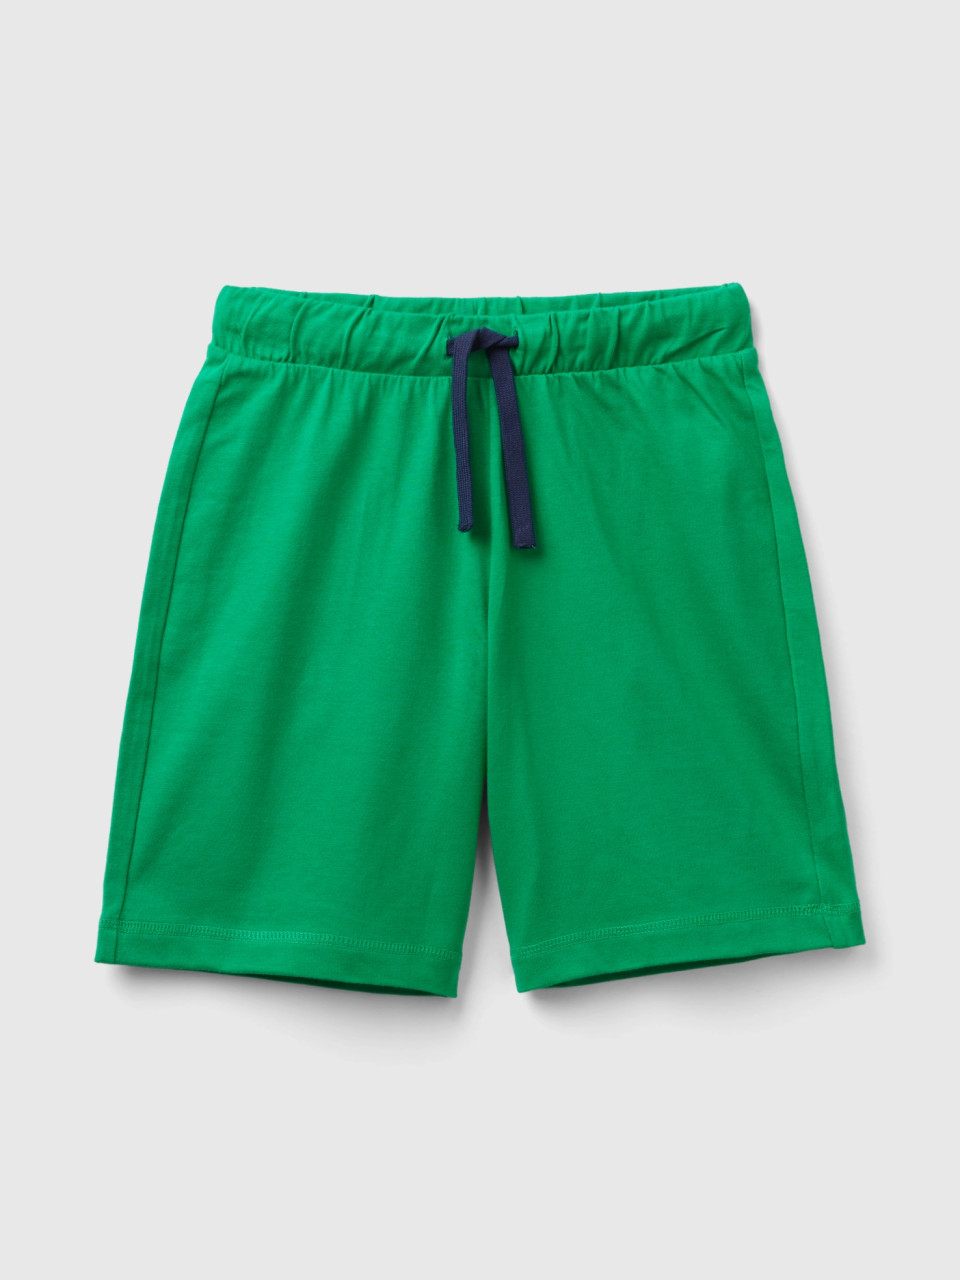 Benetton, 100% Cotton Bermudas, Green, Kids